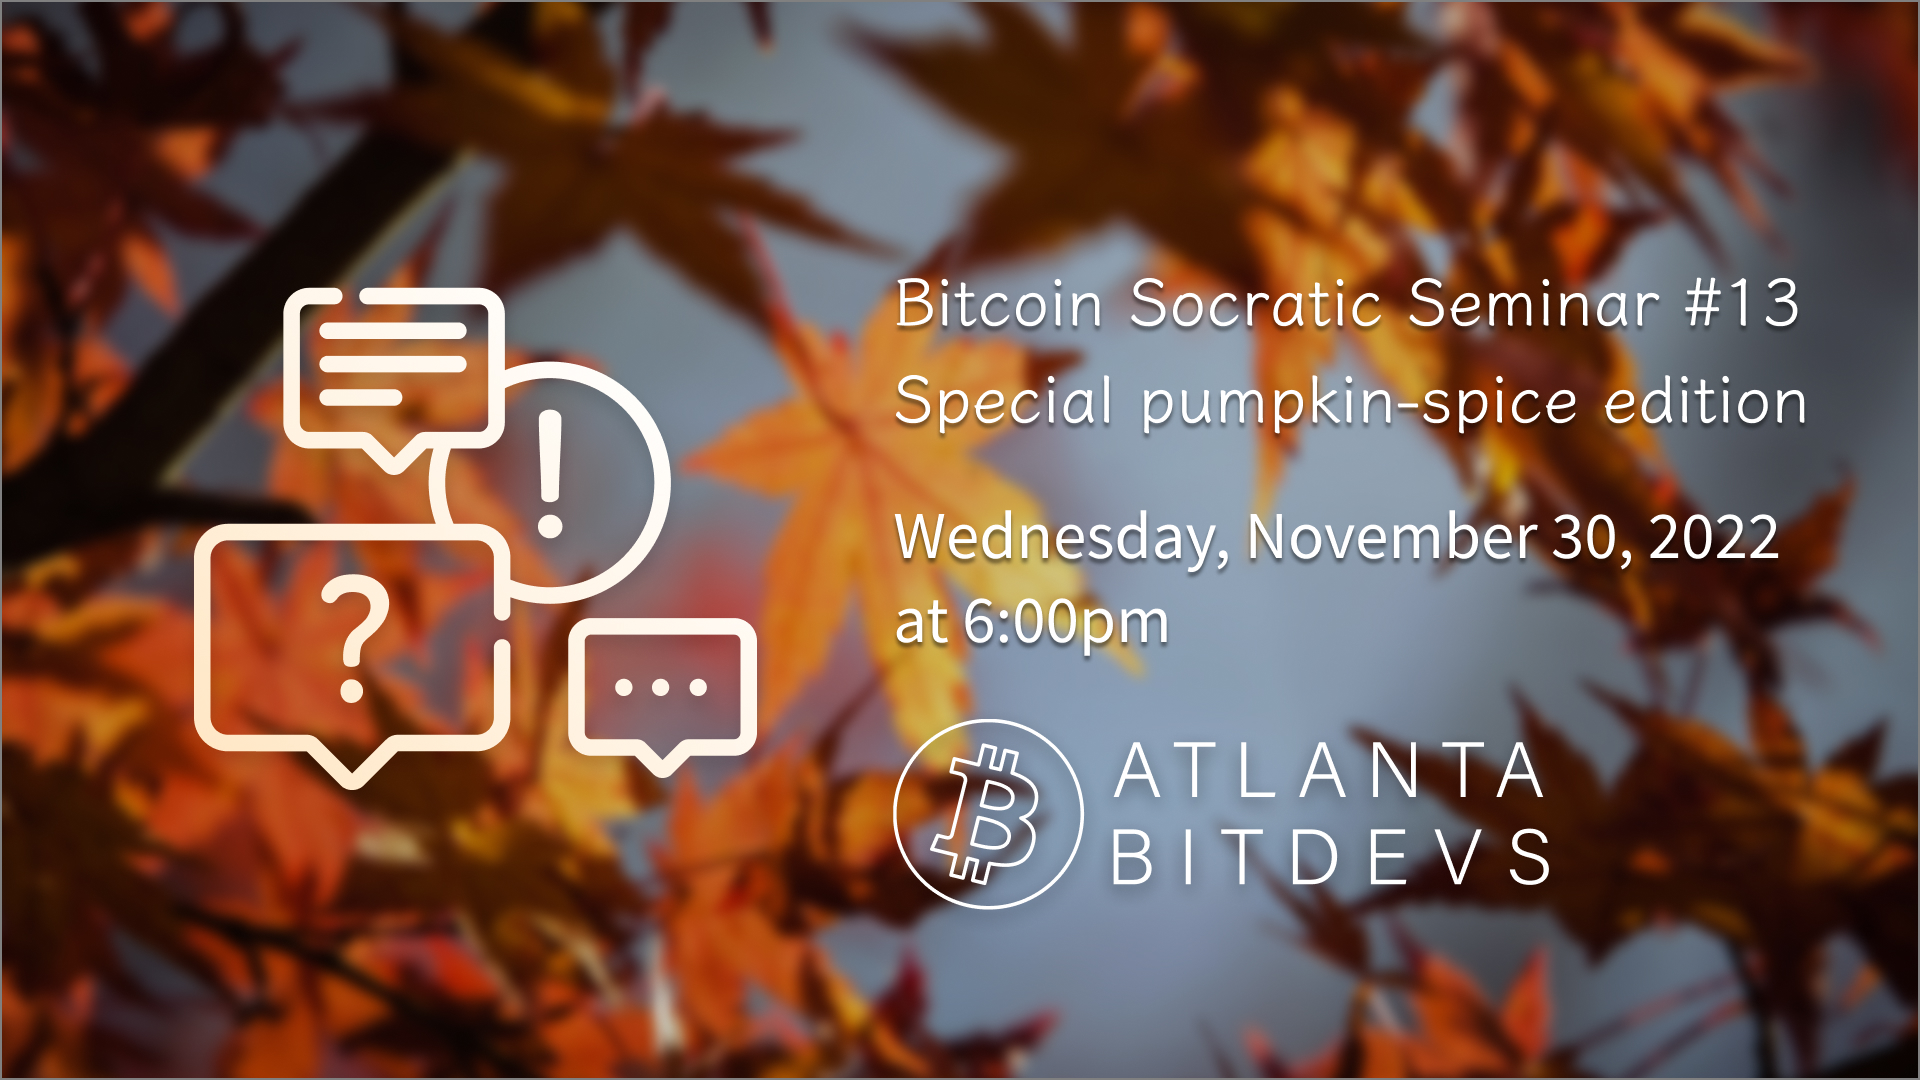 Bitcoin Socratic Seminar #13 - Atlanta BitDevs